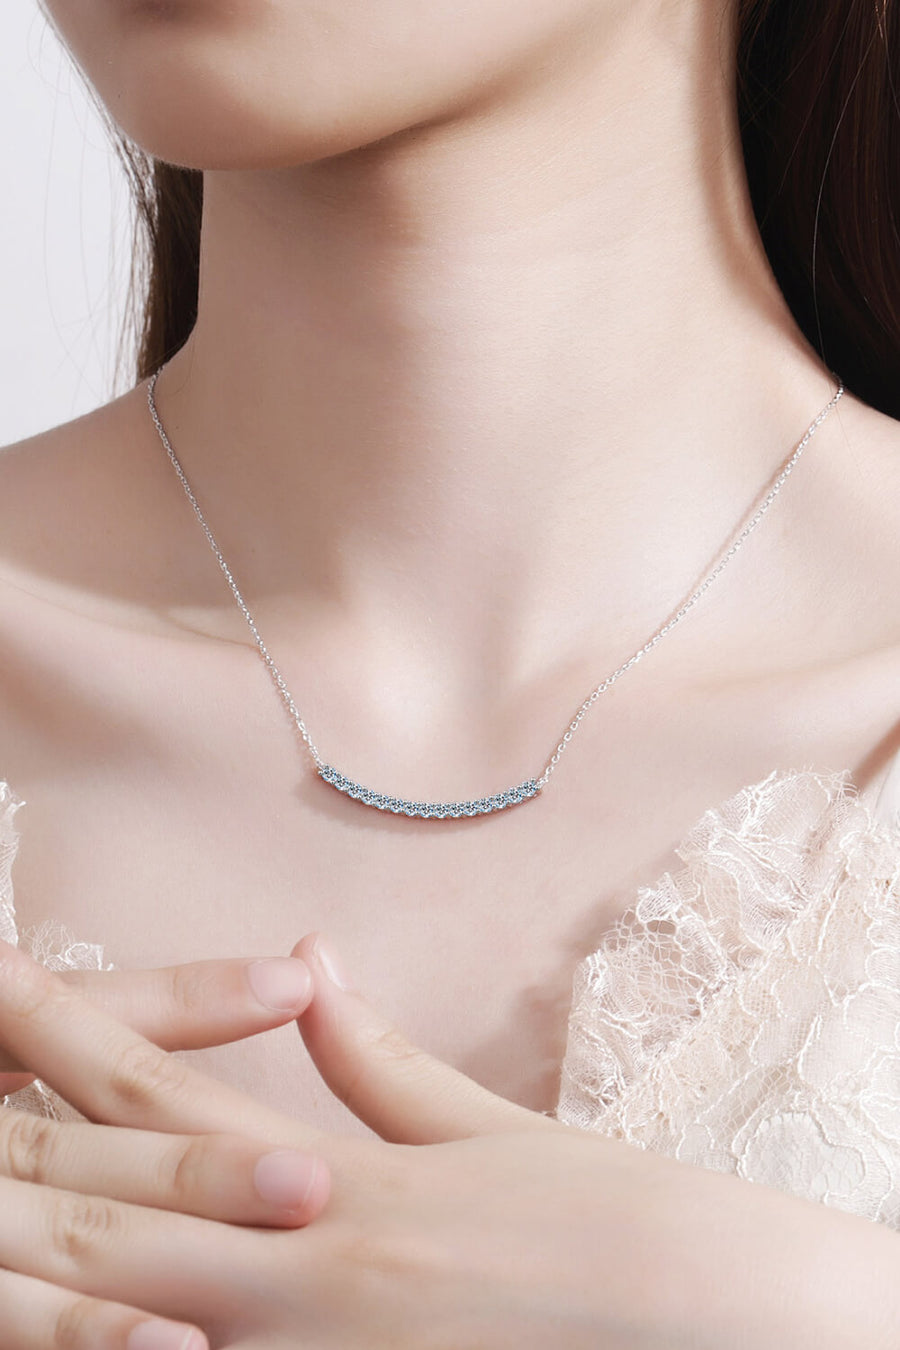 1# BEST Diamond Pendant Necklace Jewelry Gifts for Women | #1 Best Most Top Trendy Trending 0.45 Carat Diamond Curved Bar Necklace Gift for Women, Ladies | MASON New York